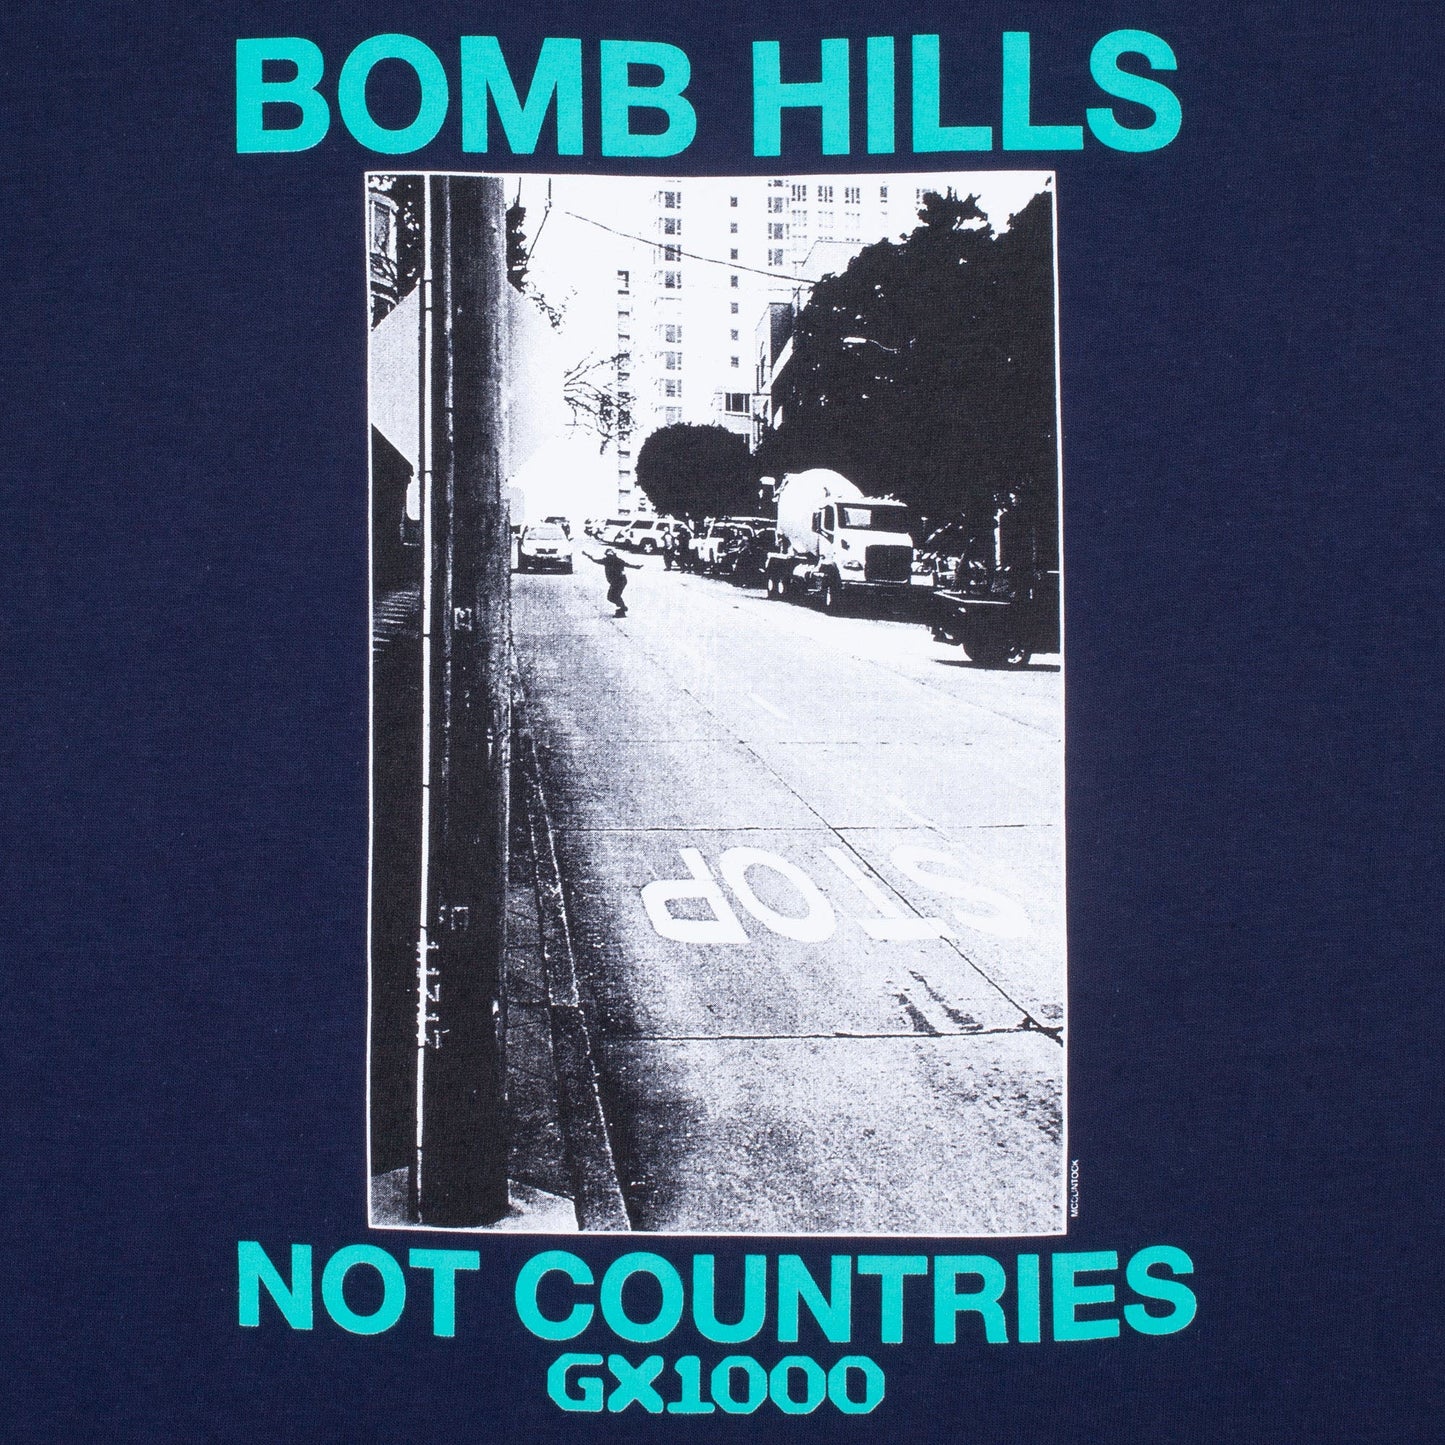 GX1000 Bomb Hills Not Countries Tee, navy - Tiki Room Skateboards - 2